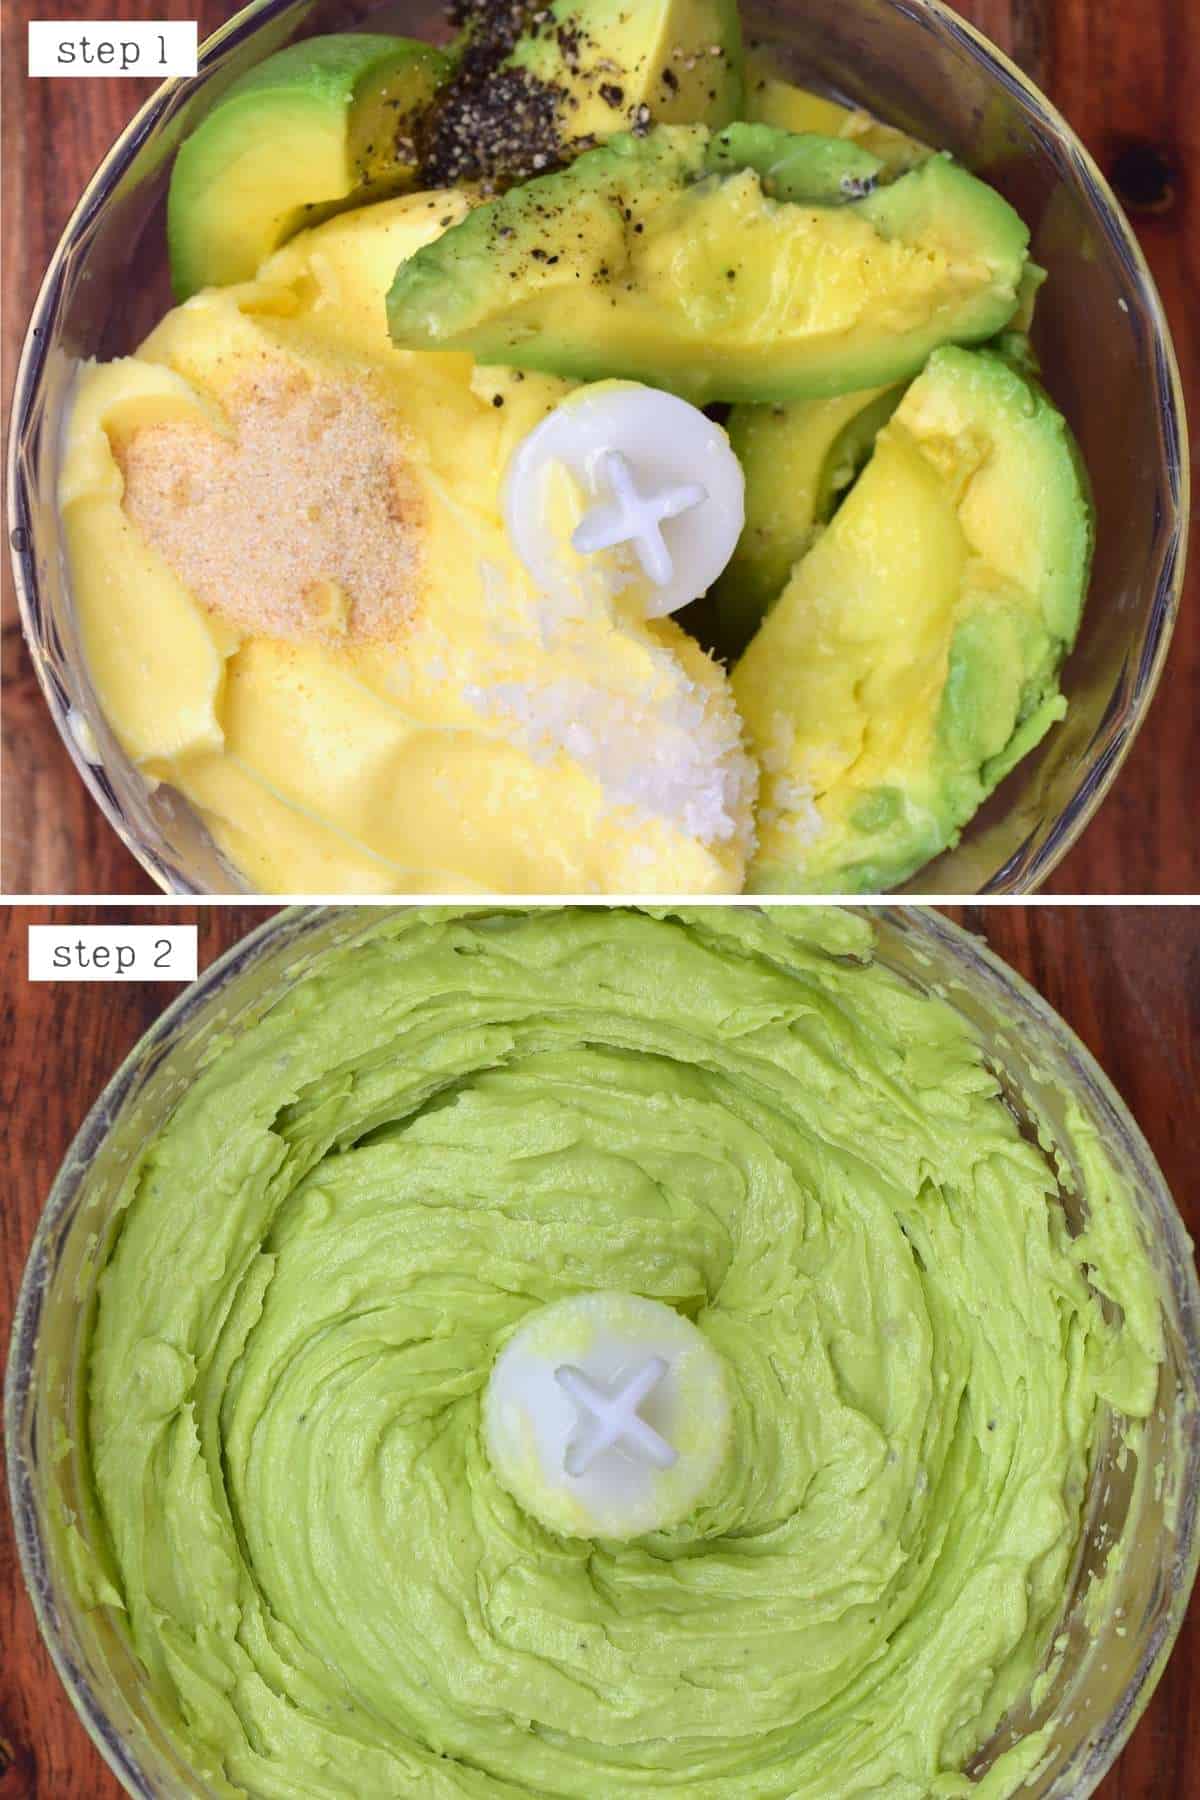 Steps for blending avocado with butter